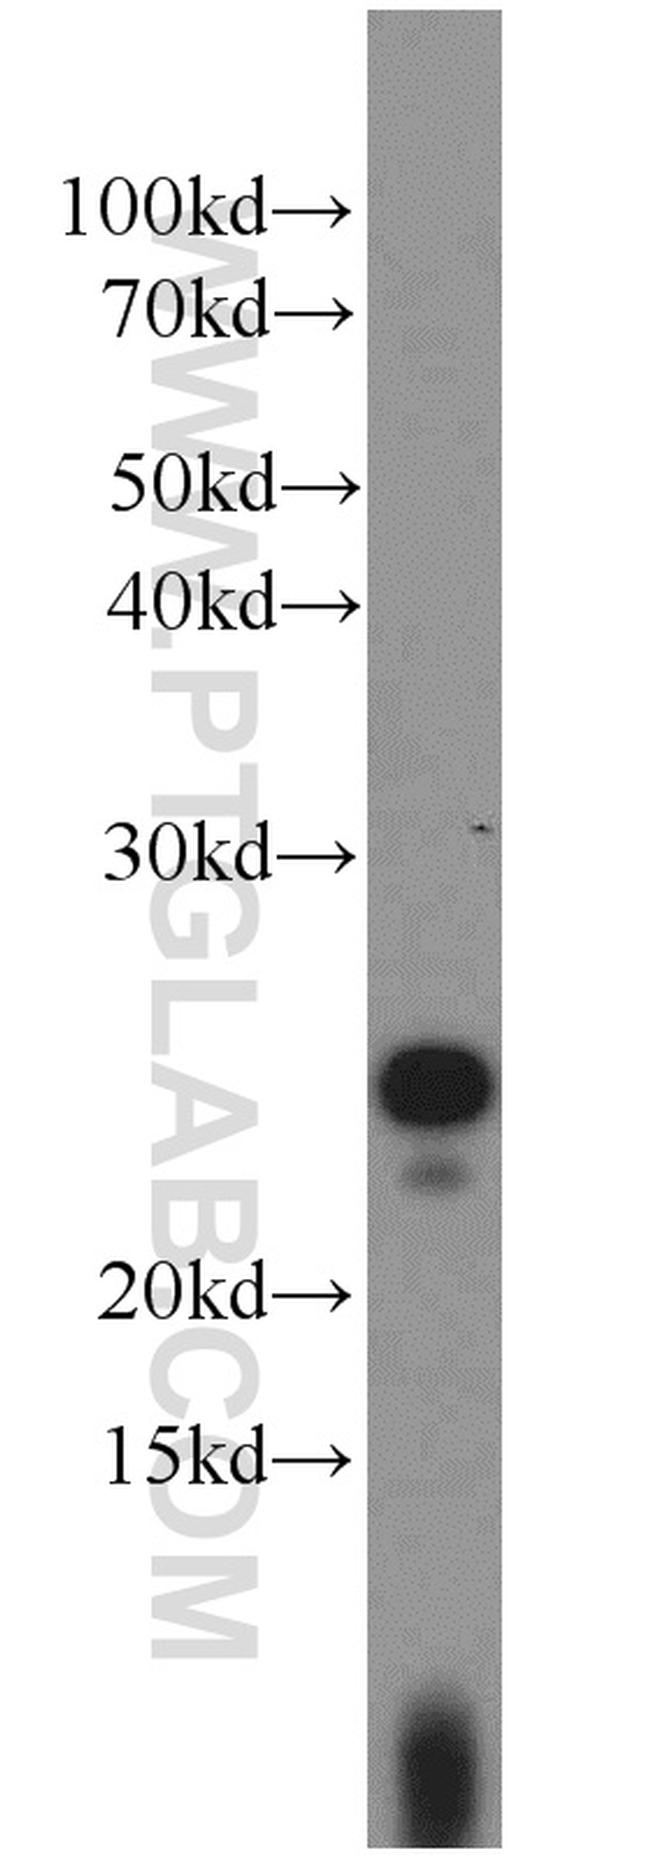 UBE2E3 Antibody in Western Blot (WB)